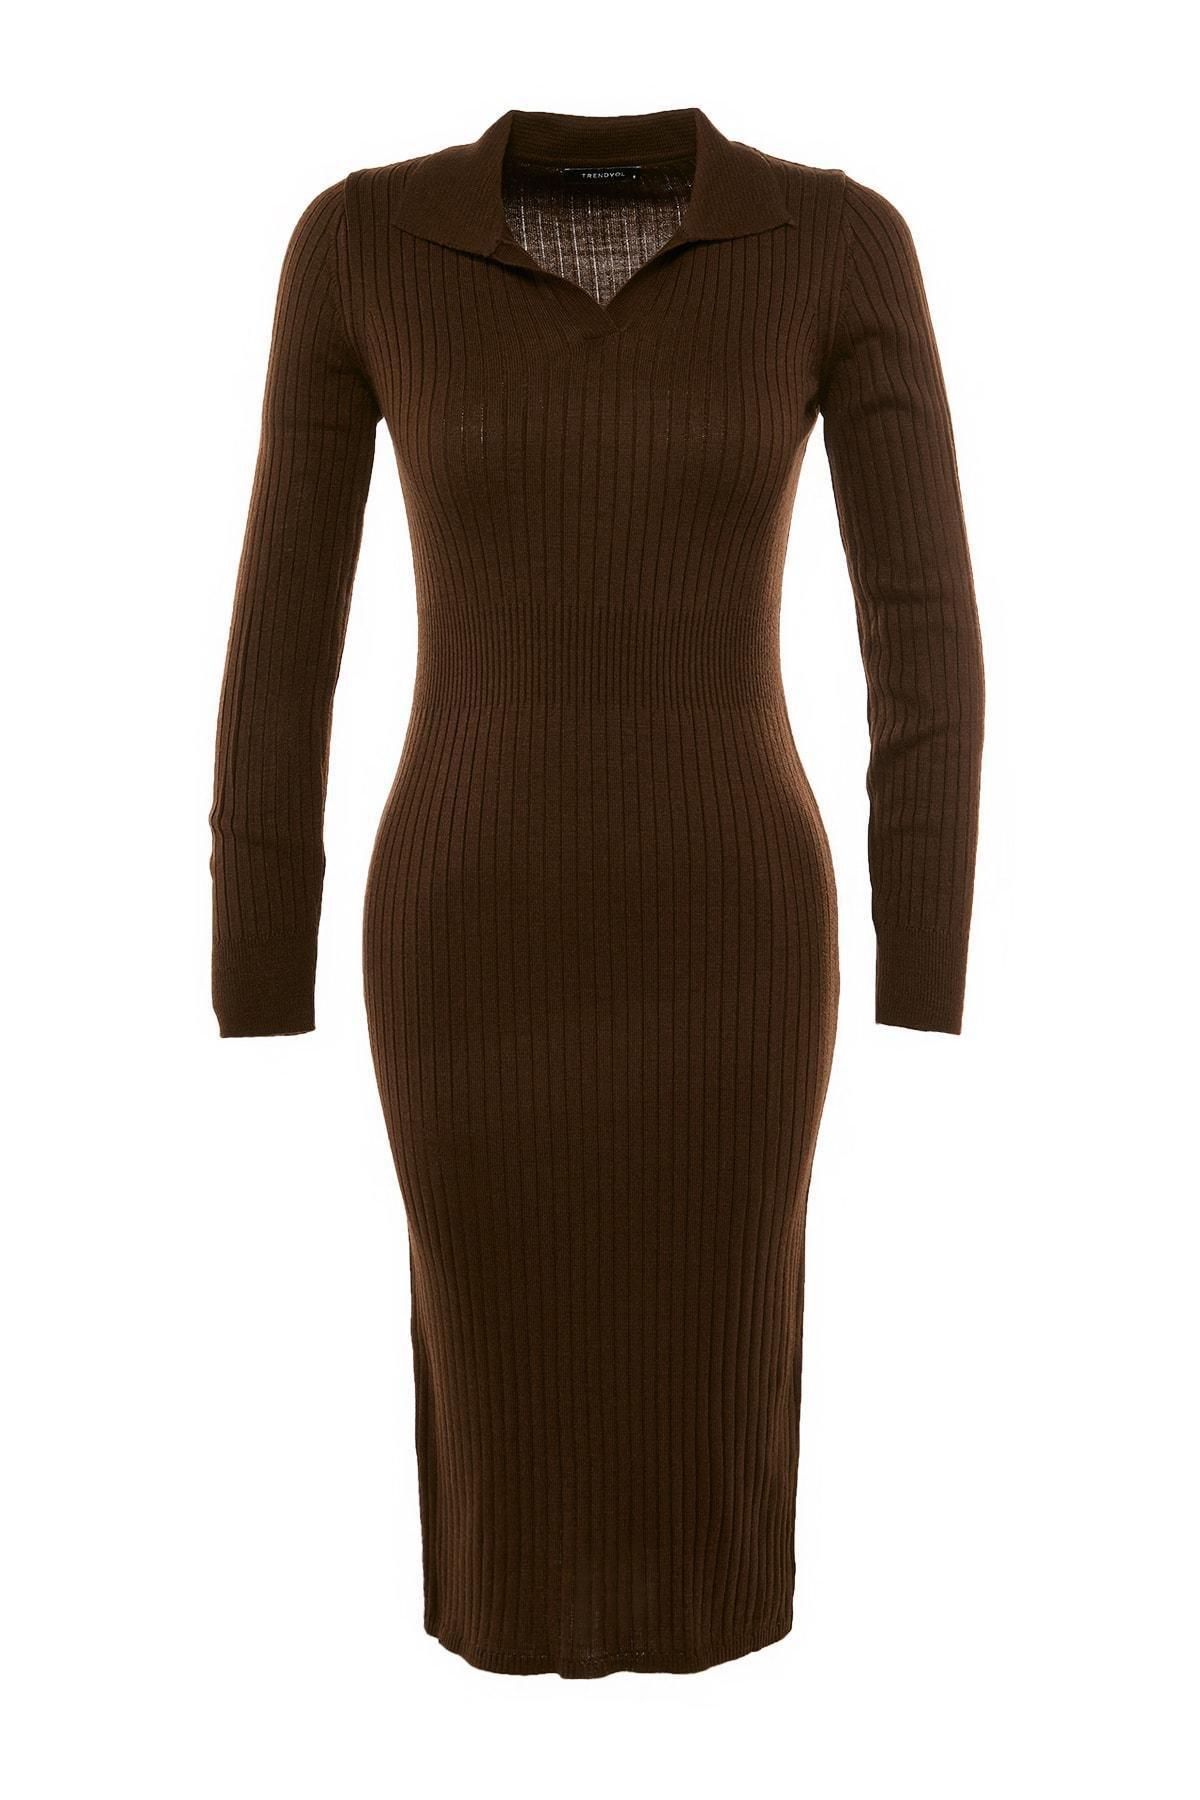 Trendyol - Brown Bodycon Midi Dress